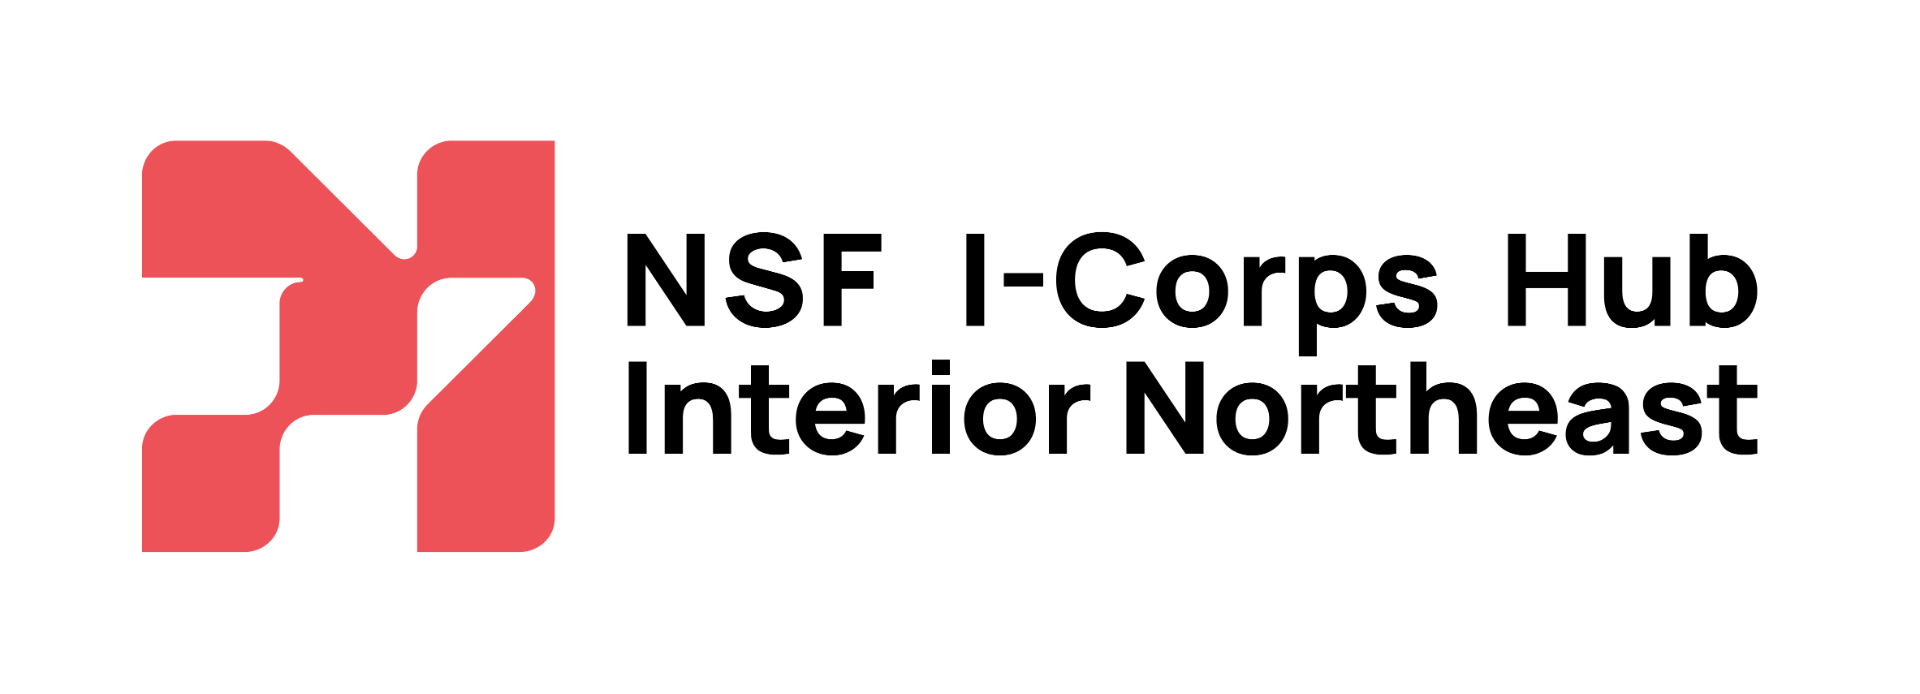 Logo for NSF I-Corps Hub Interior Northeast